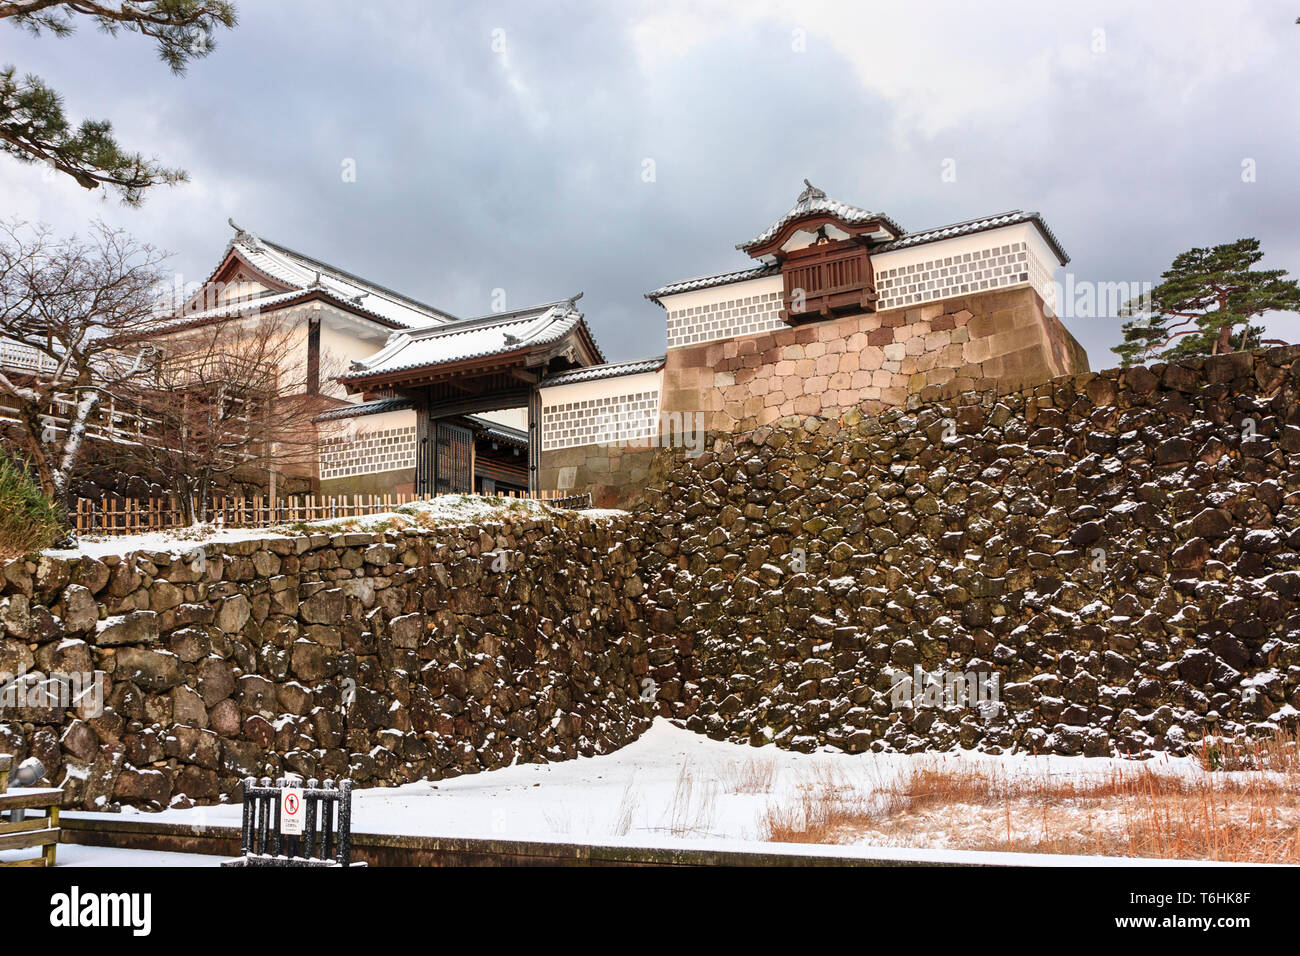 Kanazawa castle, Japan. The Koraimon type gate of the Kahoku-mon gate on top of Kahoku-zaka hill after snowfall. Dark stormy clouds overhead. Stock Photo